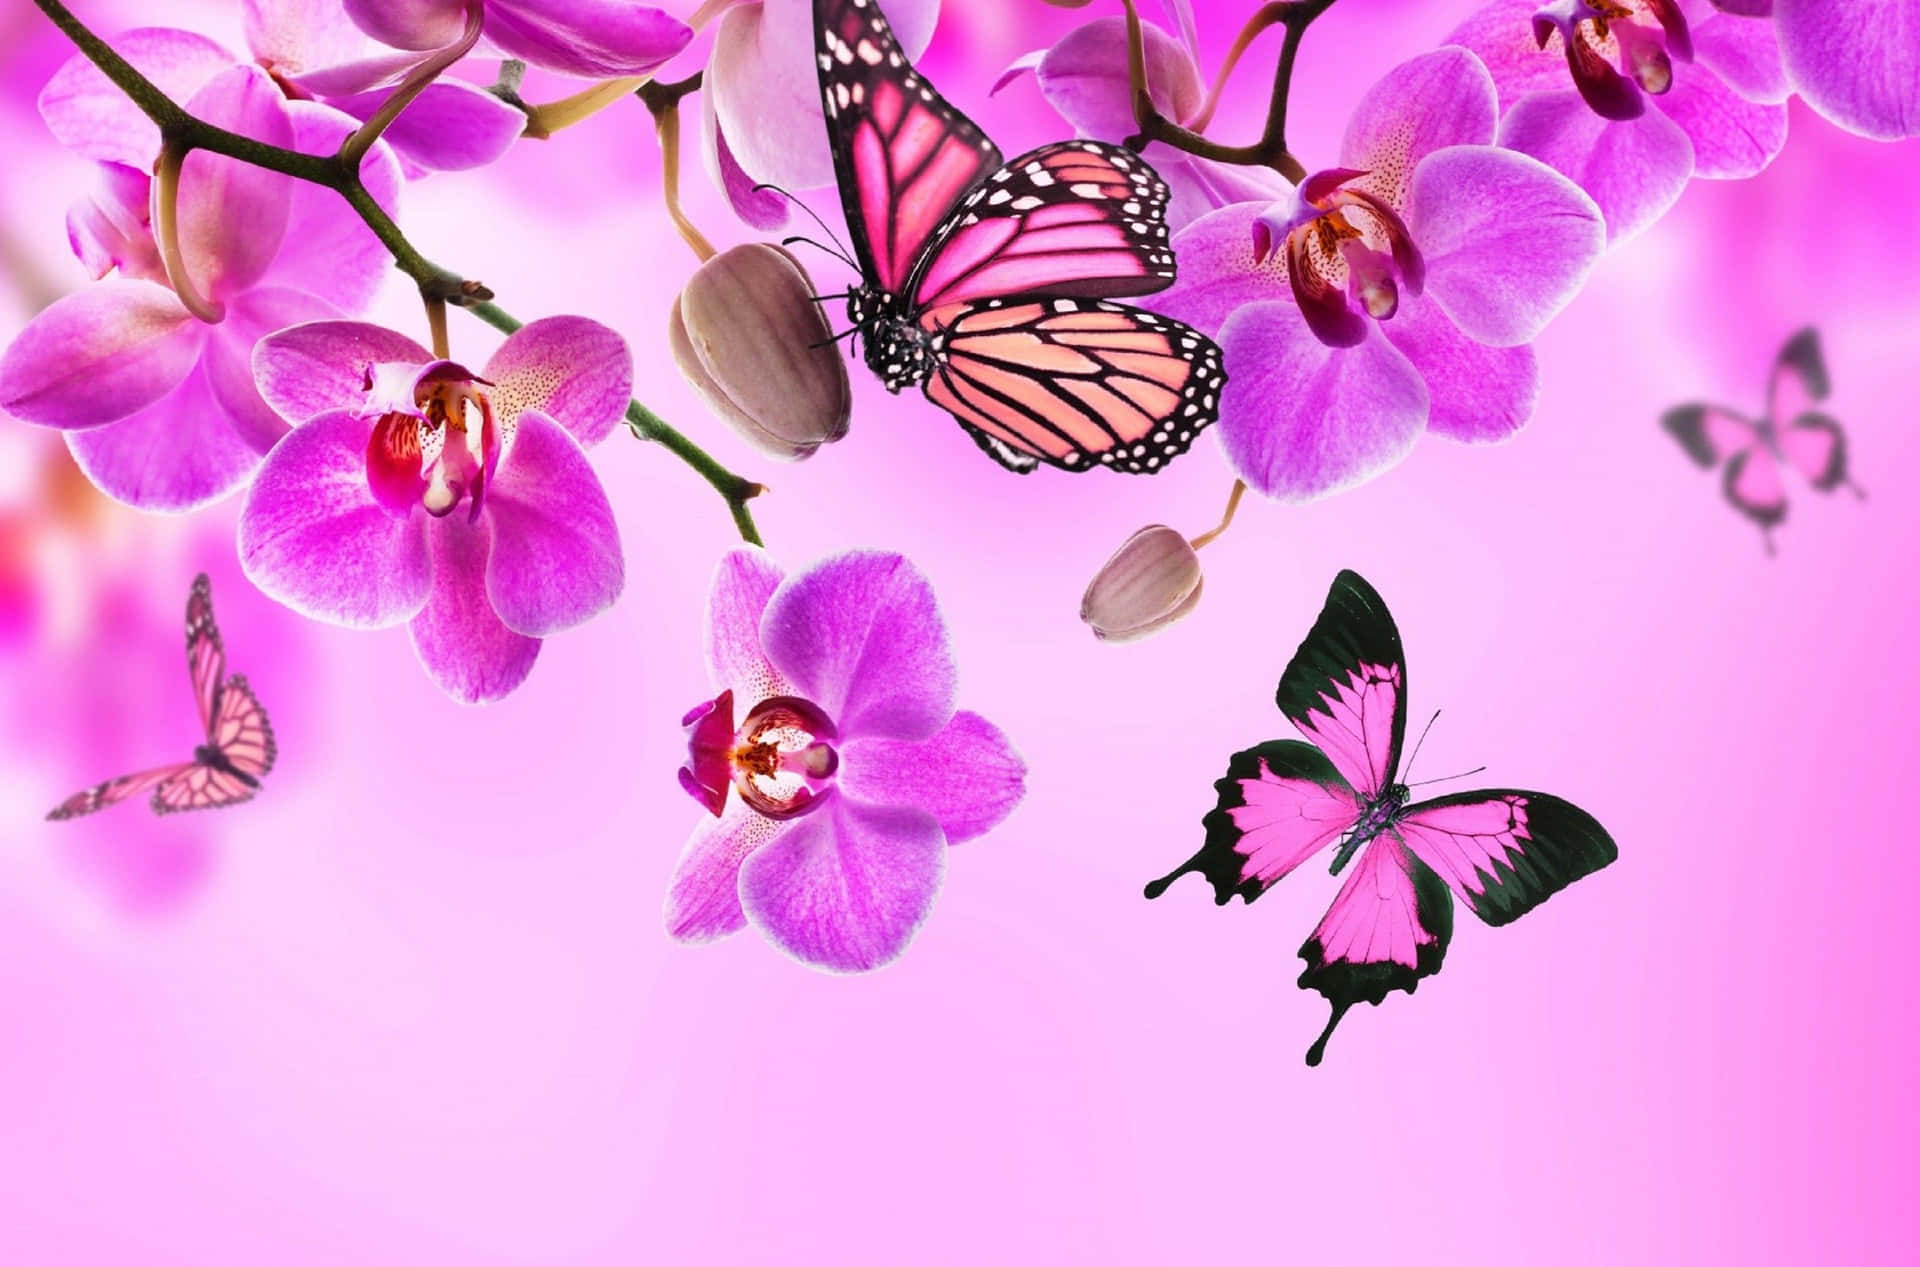 Magic Butterflies Alighting on a Spring